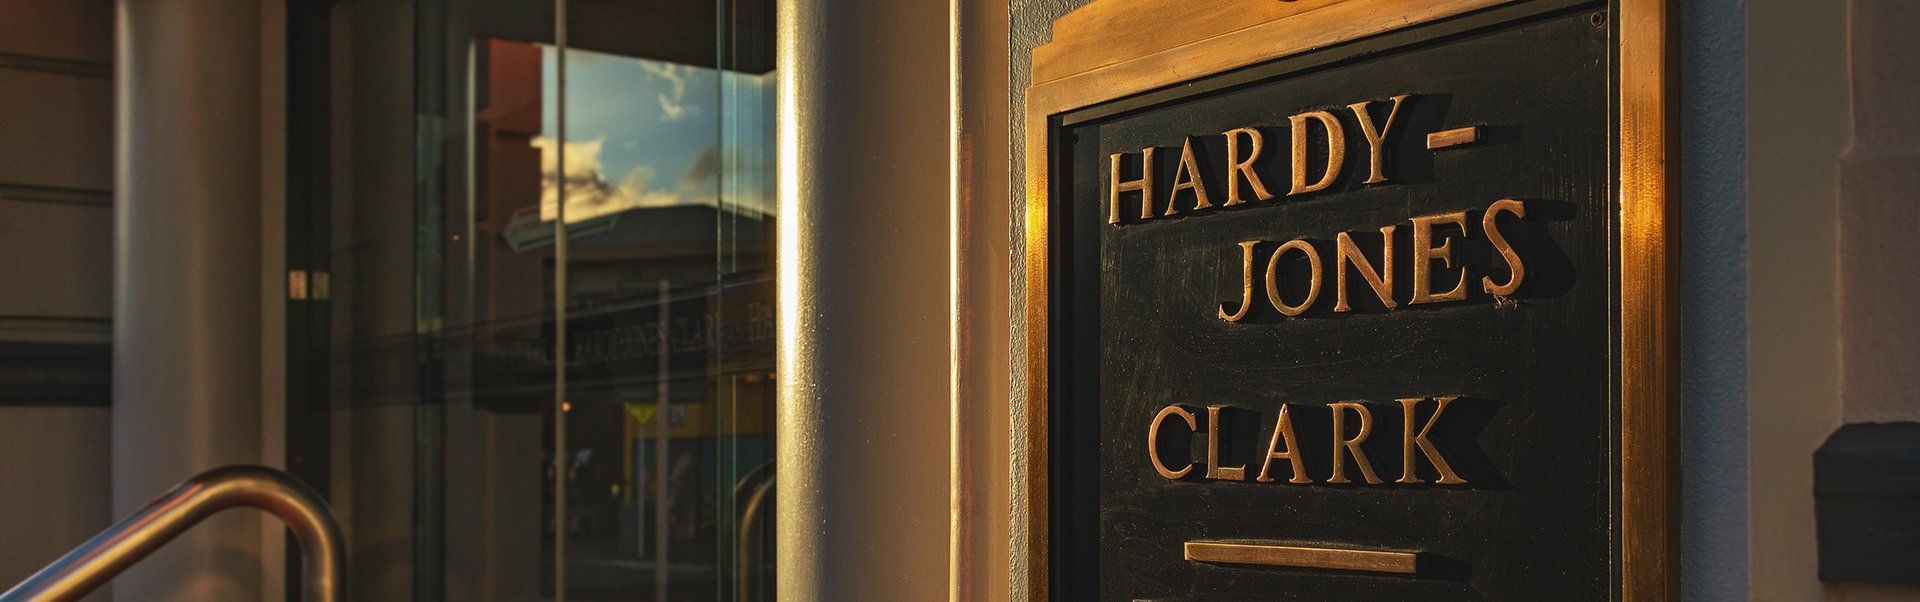 Hardy-Jones Clark legal services in Blenheim, NZ